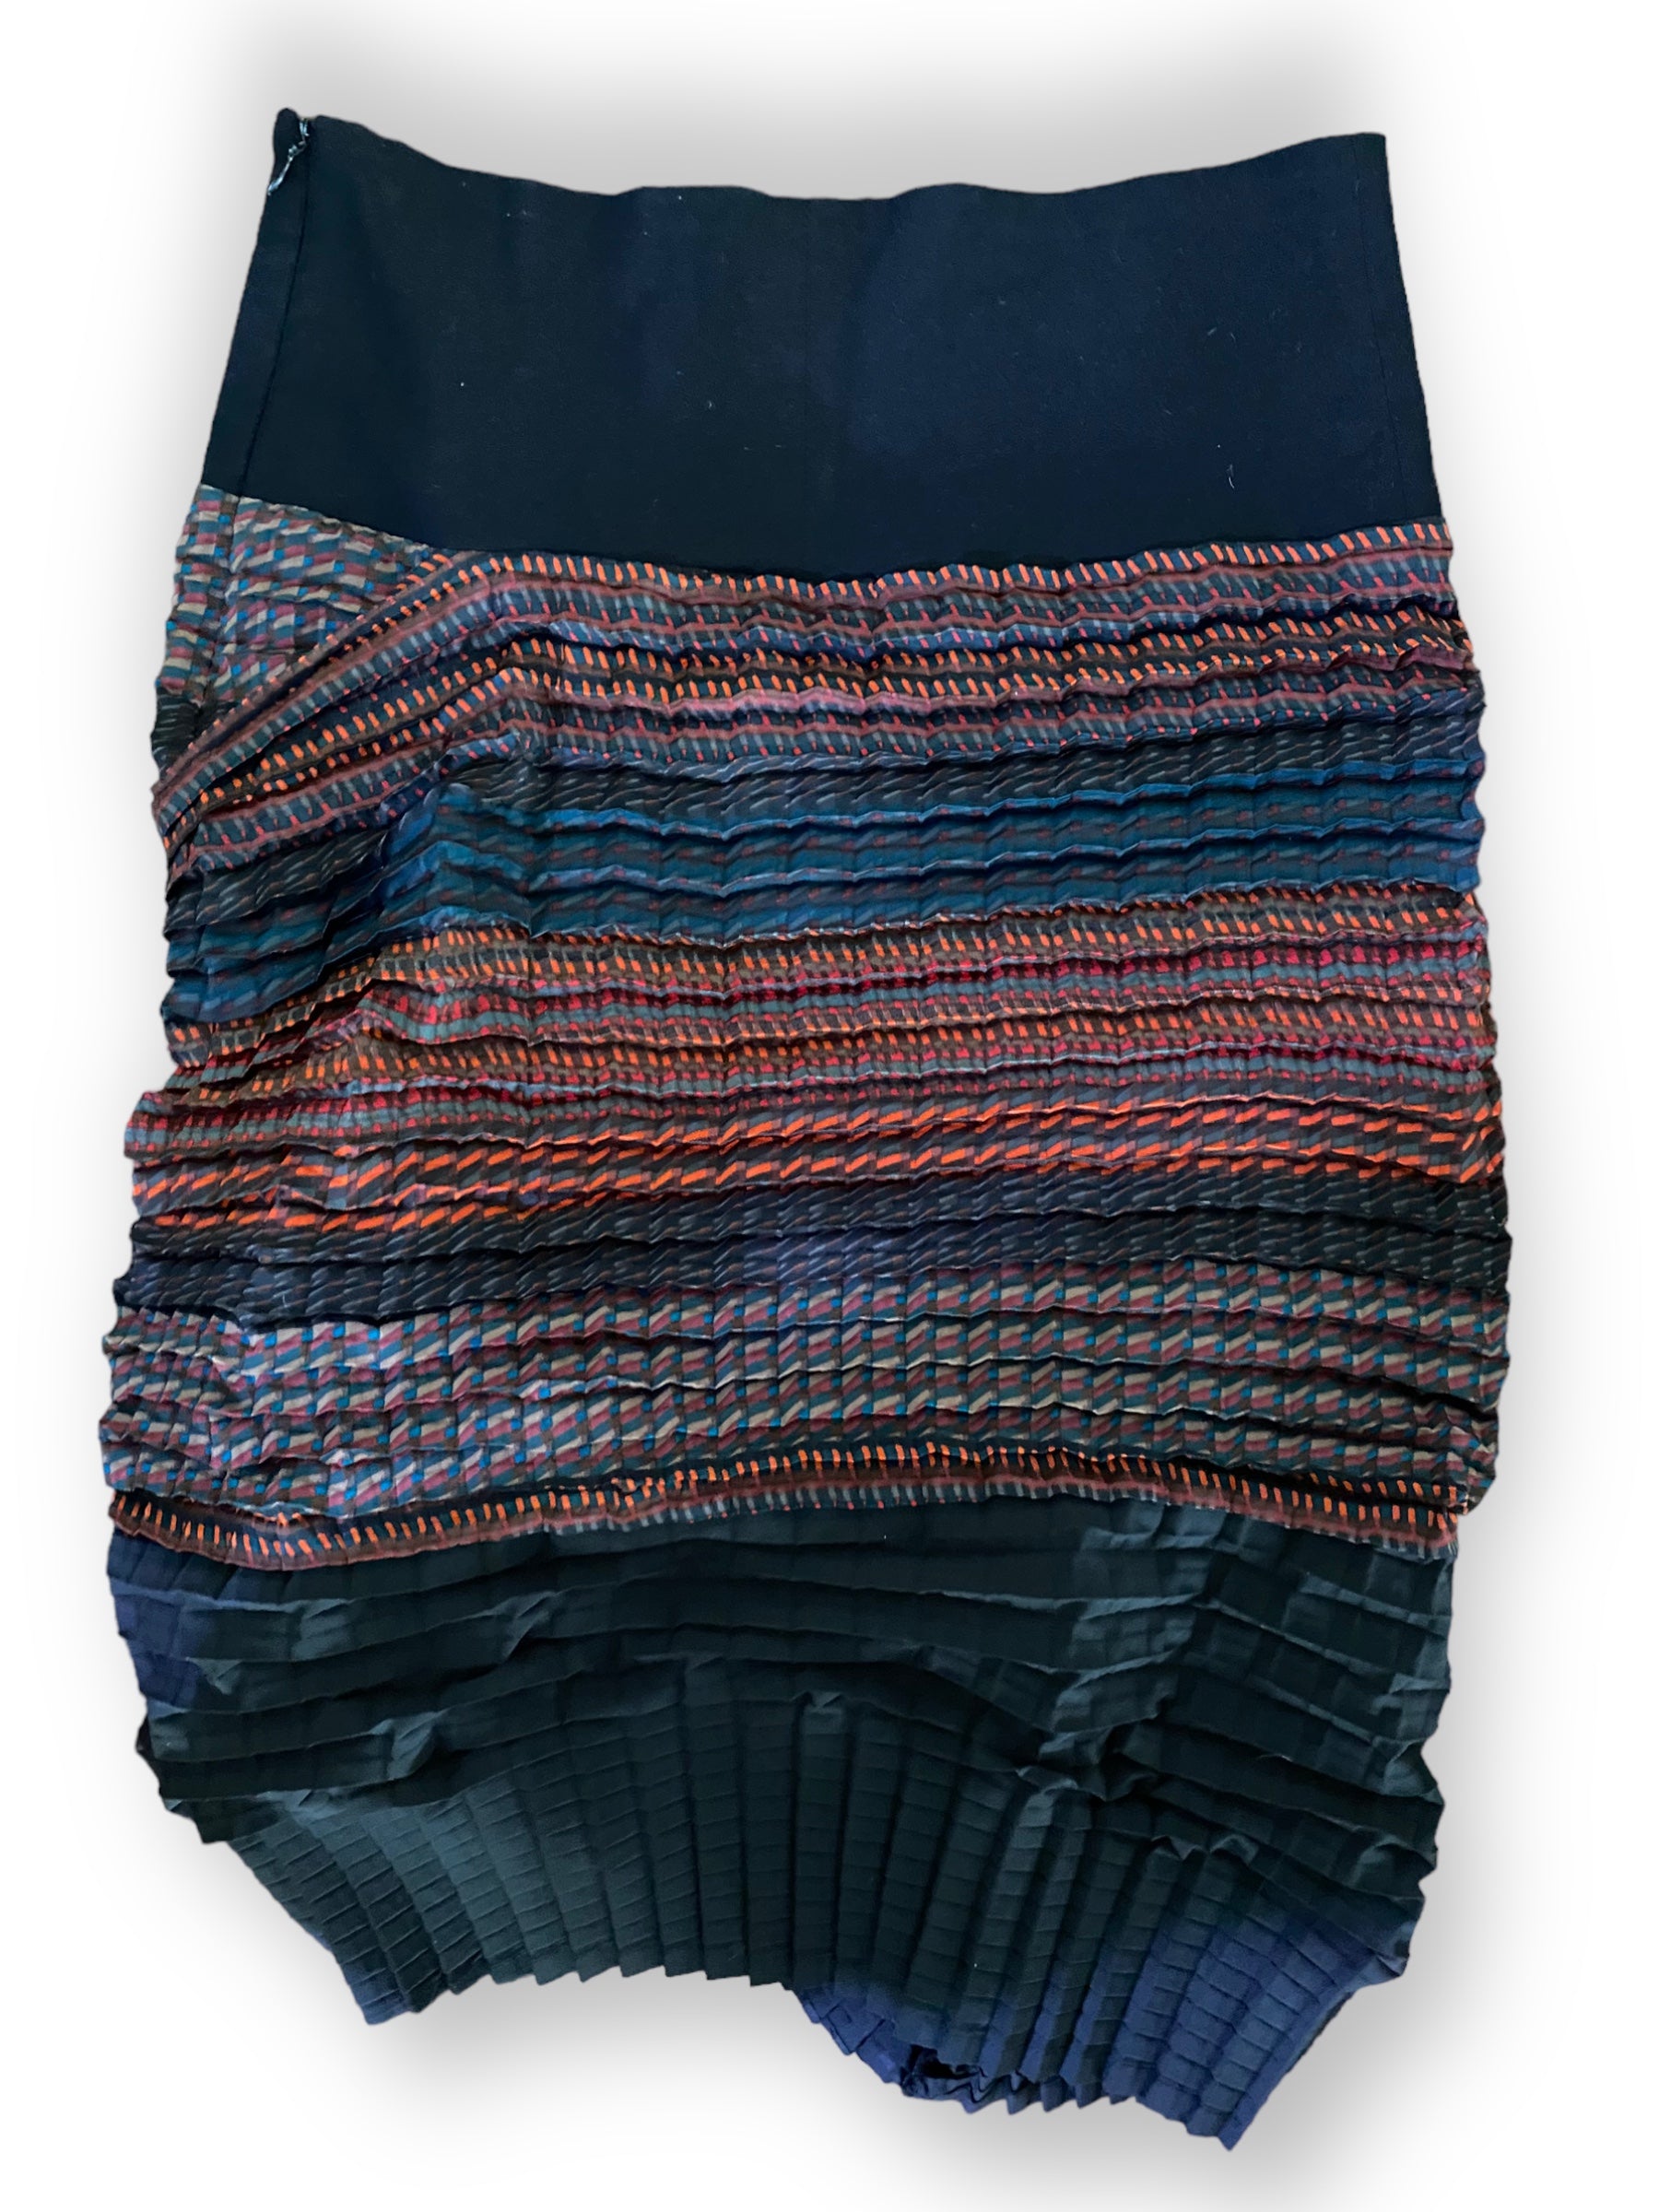 Moloko Accordion Avante Garde Skirt